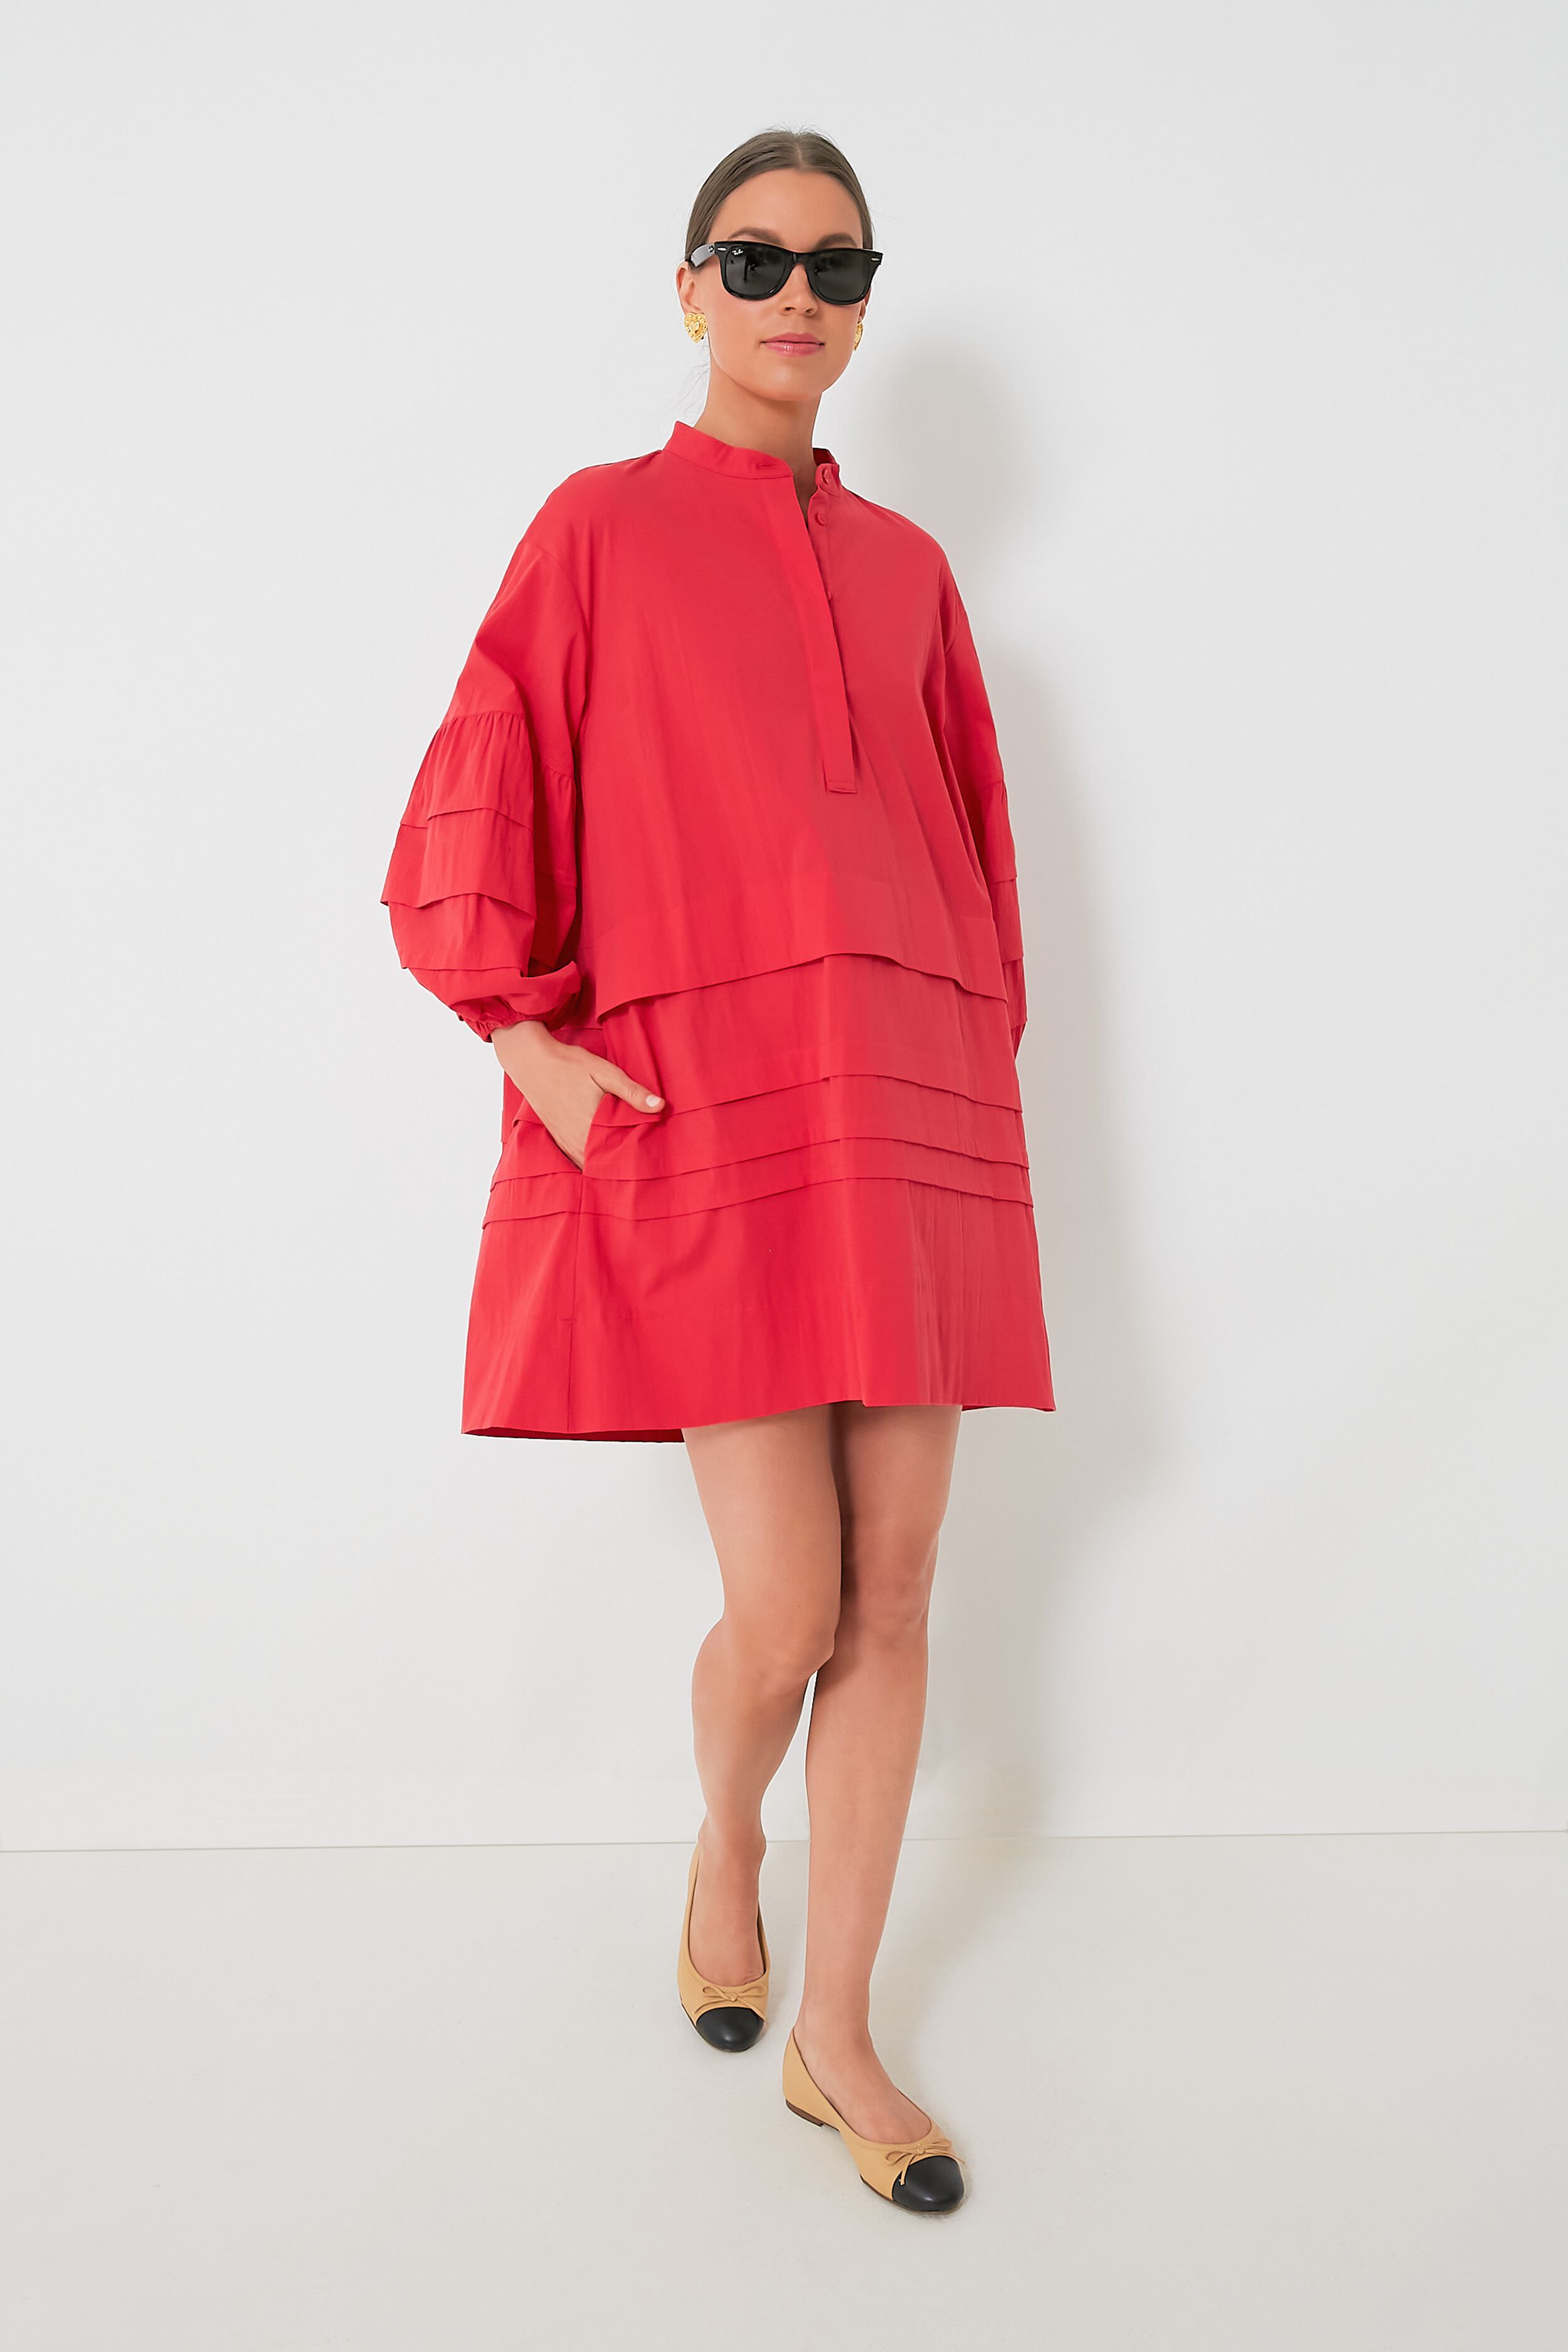 Red Chelsea Dress | Pomander Place